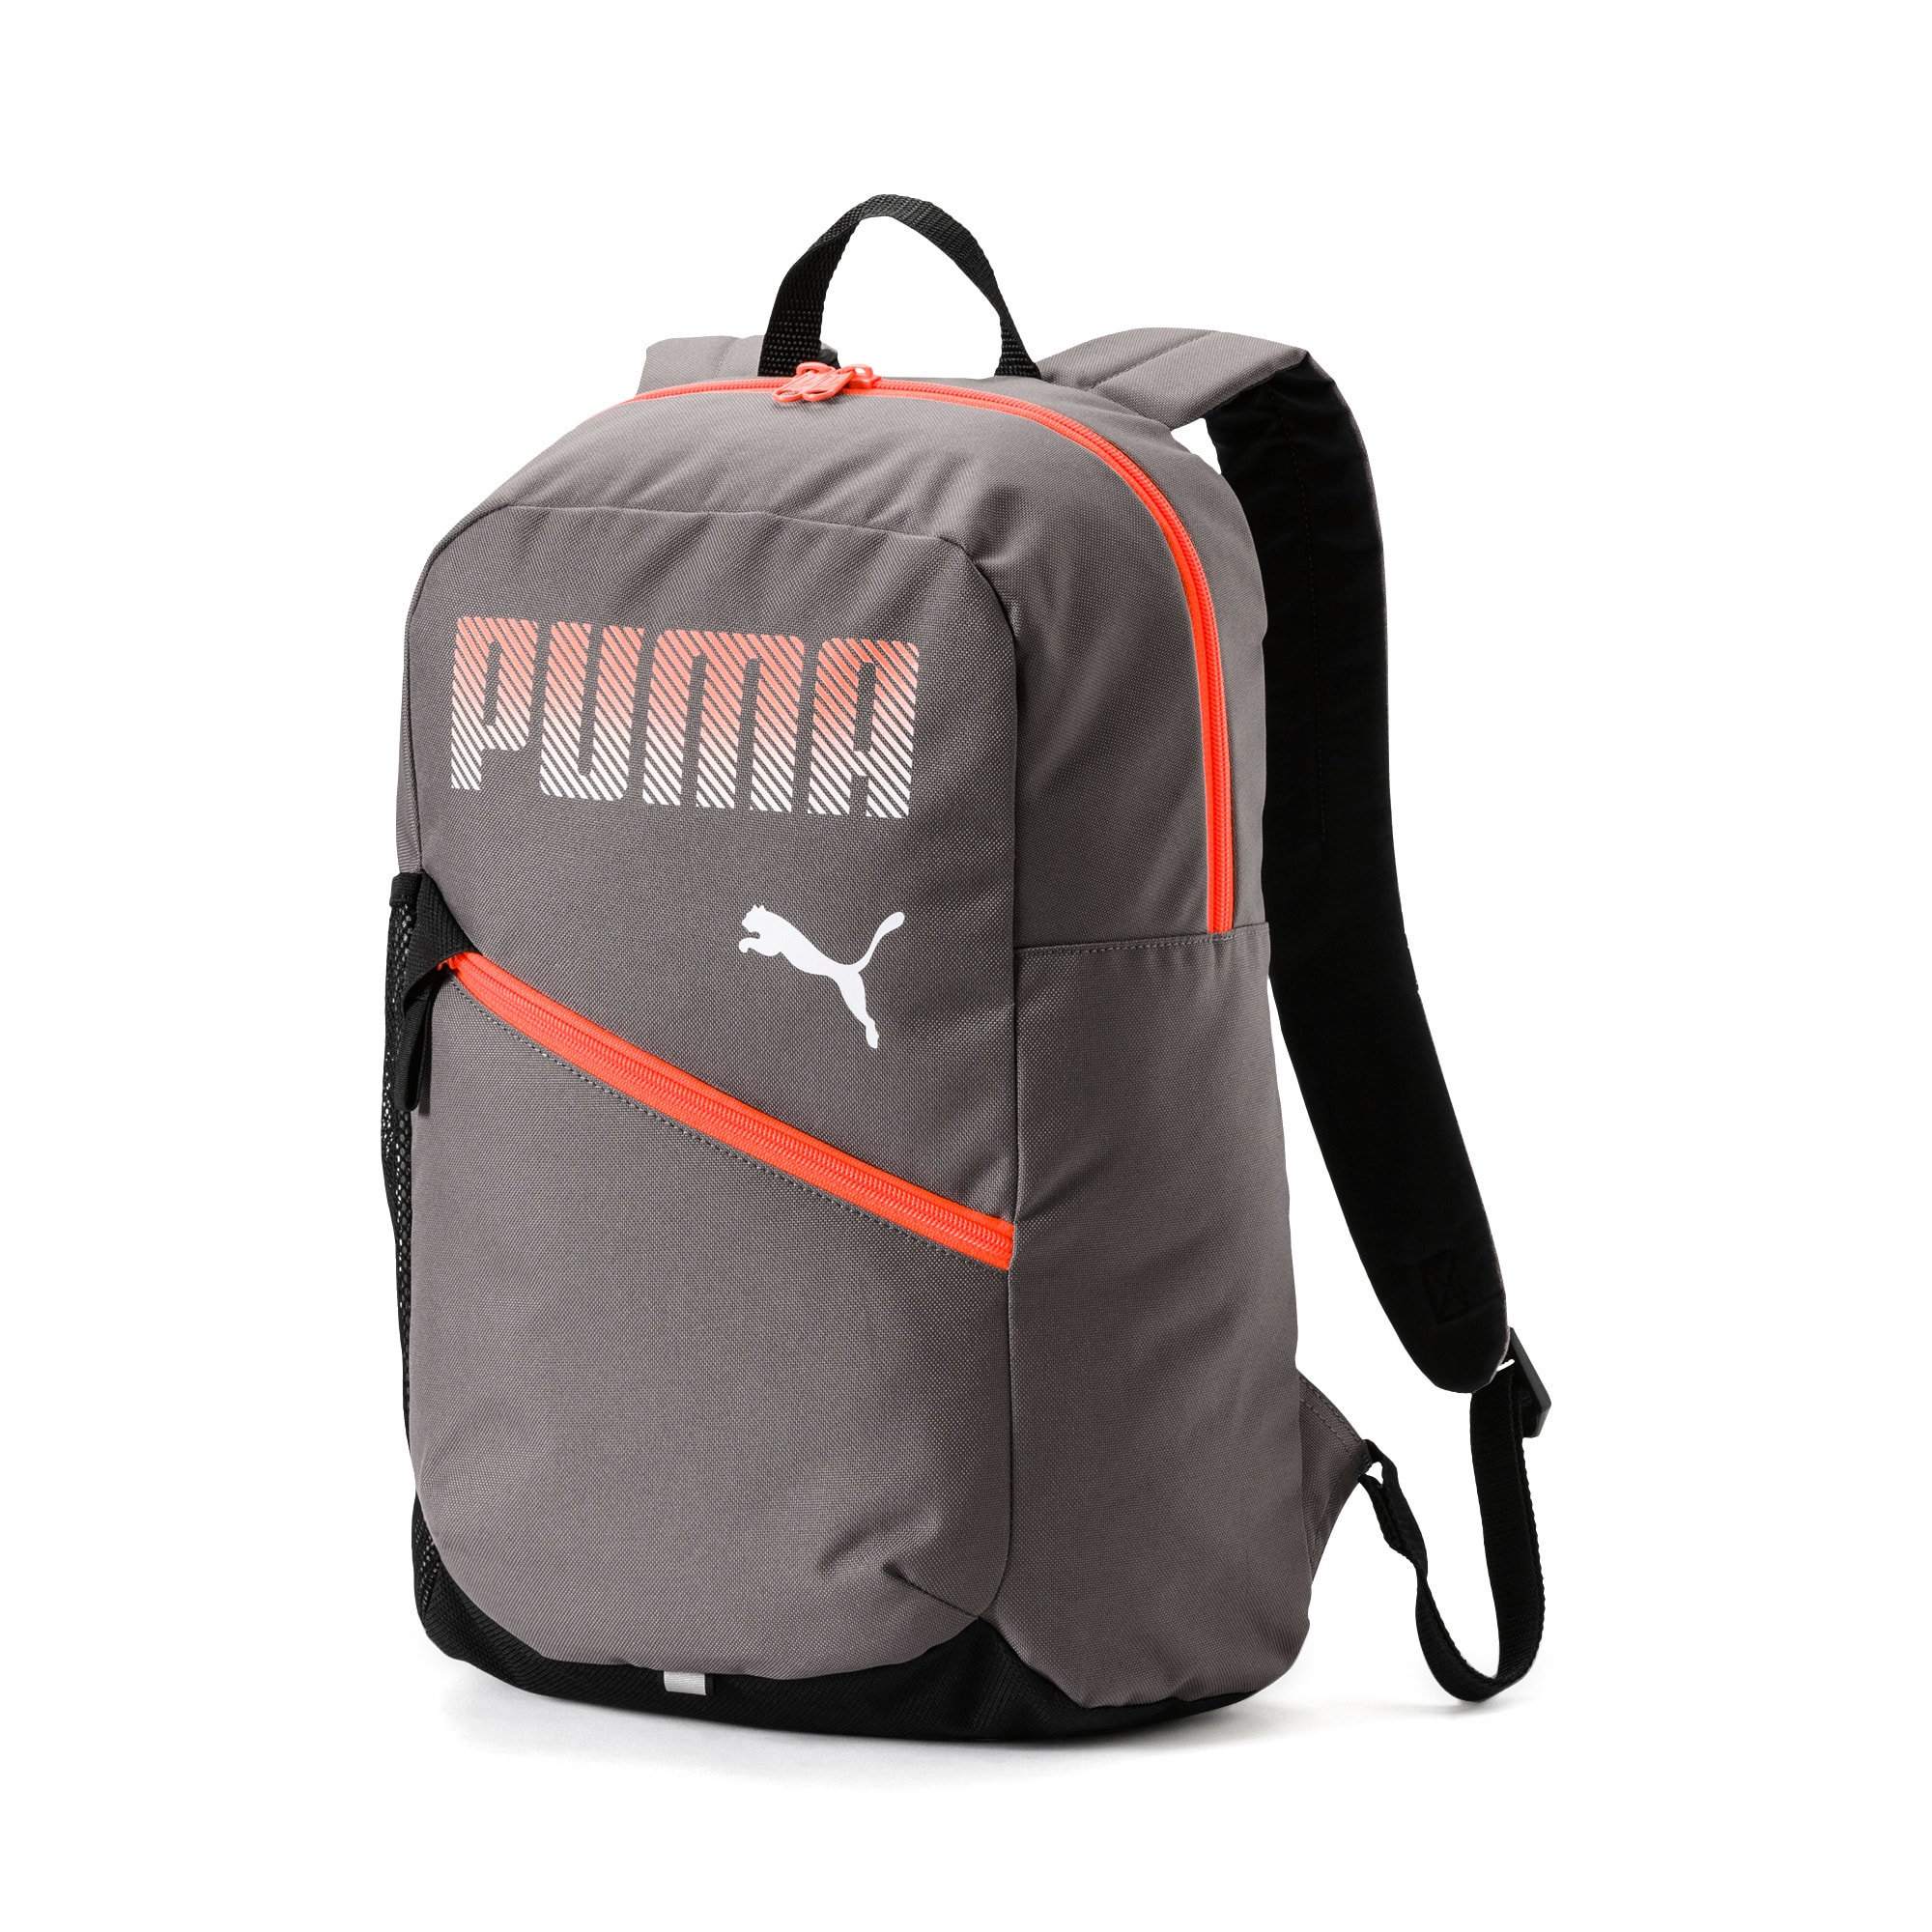 puma echo plus backpack